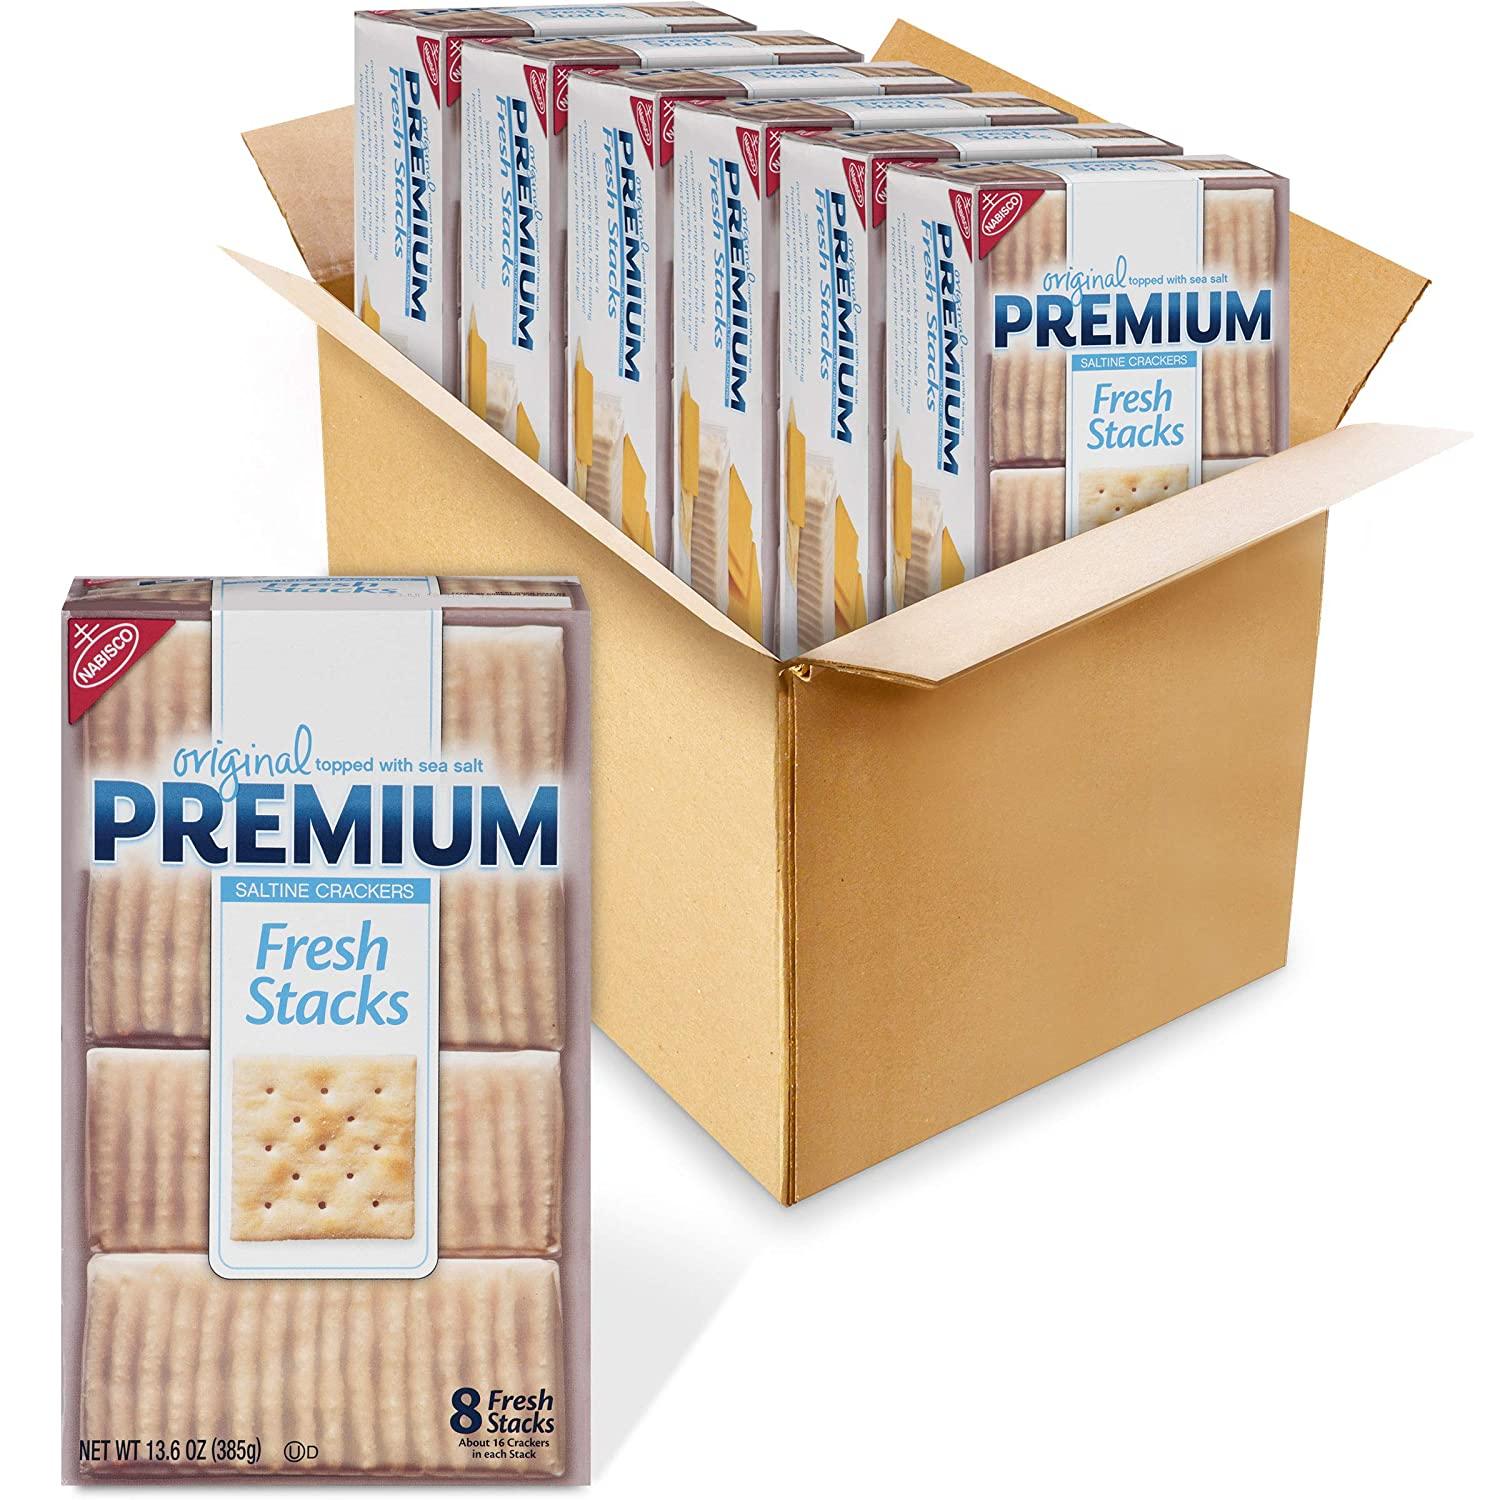 6 Premium Original Fresh Stacks Saltine Crackers for $11.50 Shipped